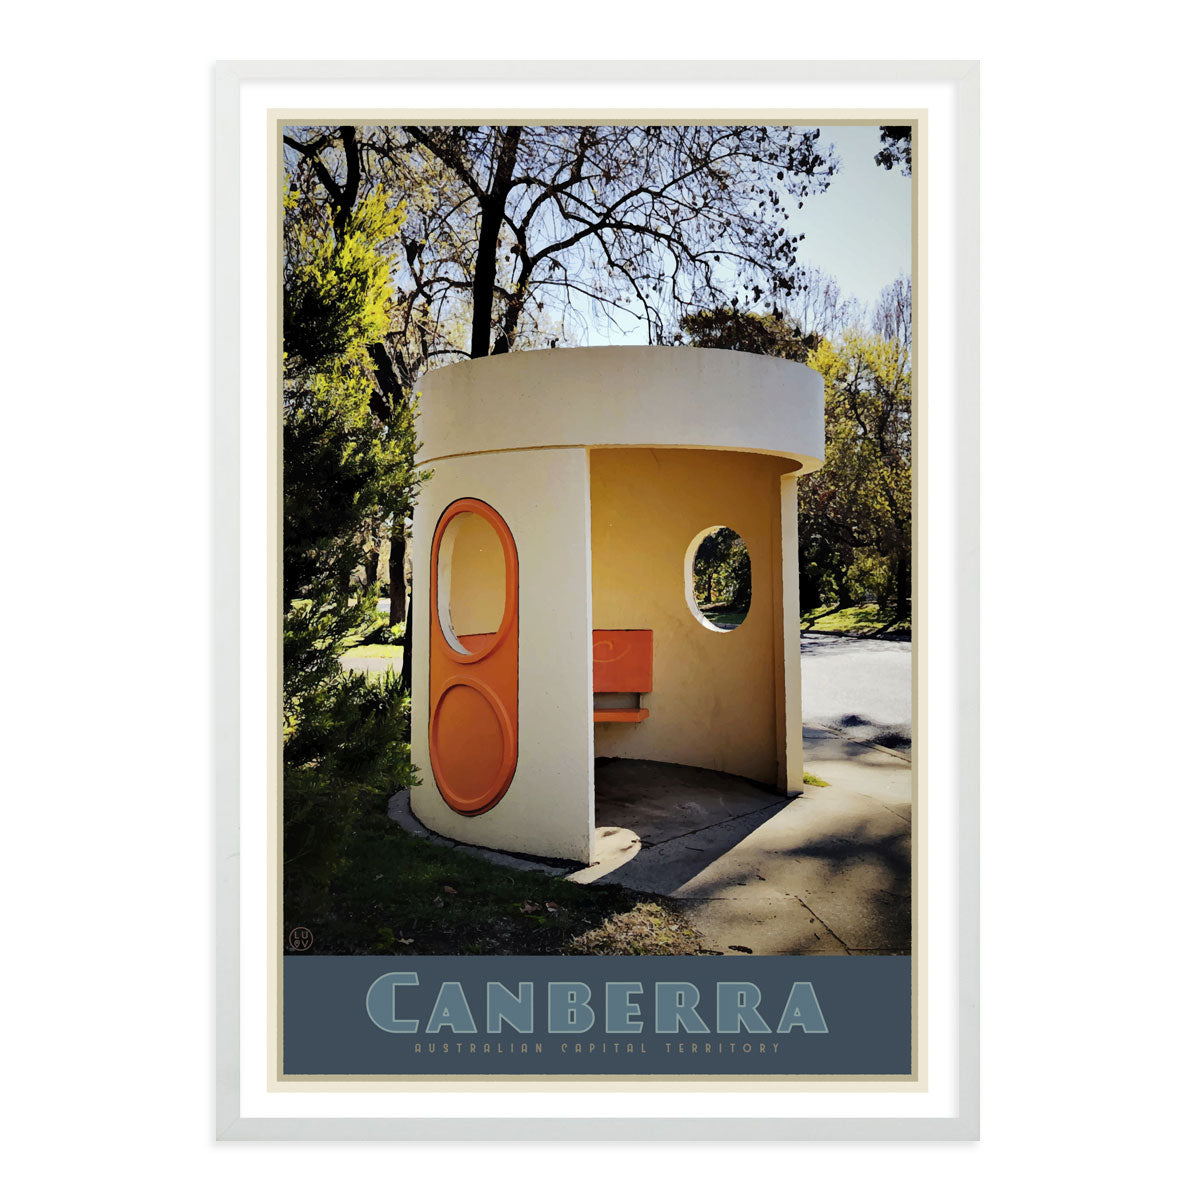 Canberra busstop white framed vintage travel poster. Original design by Places we luv